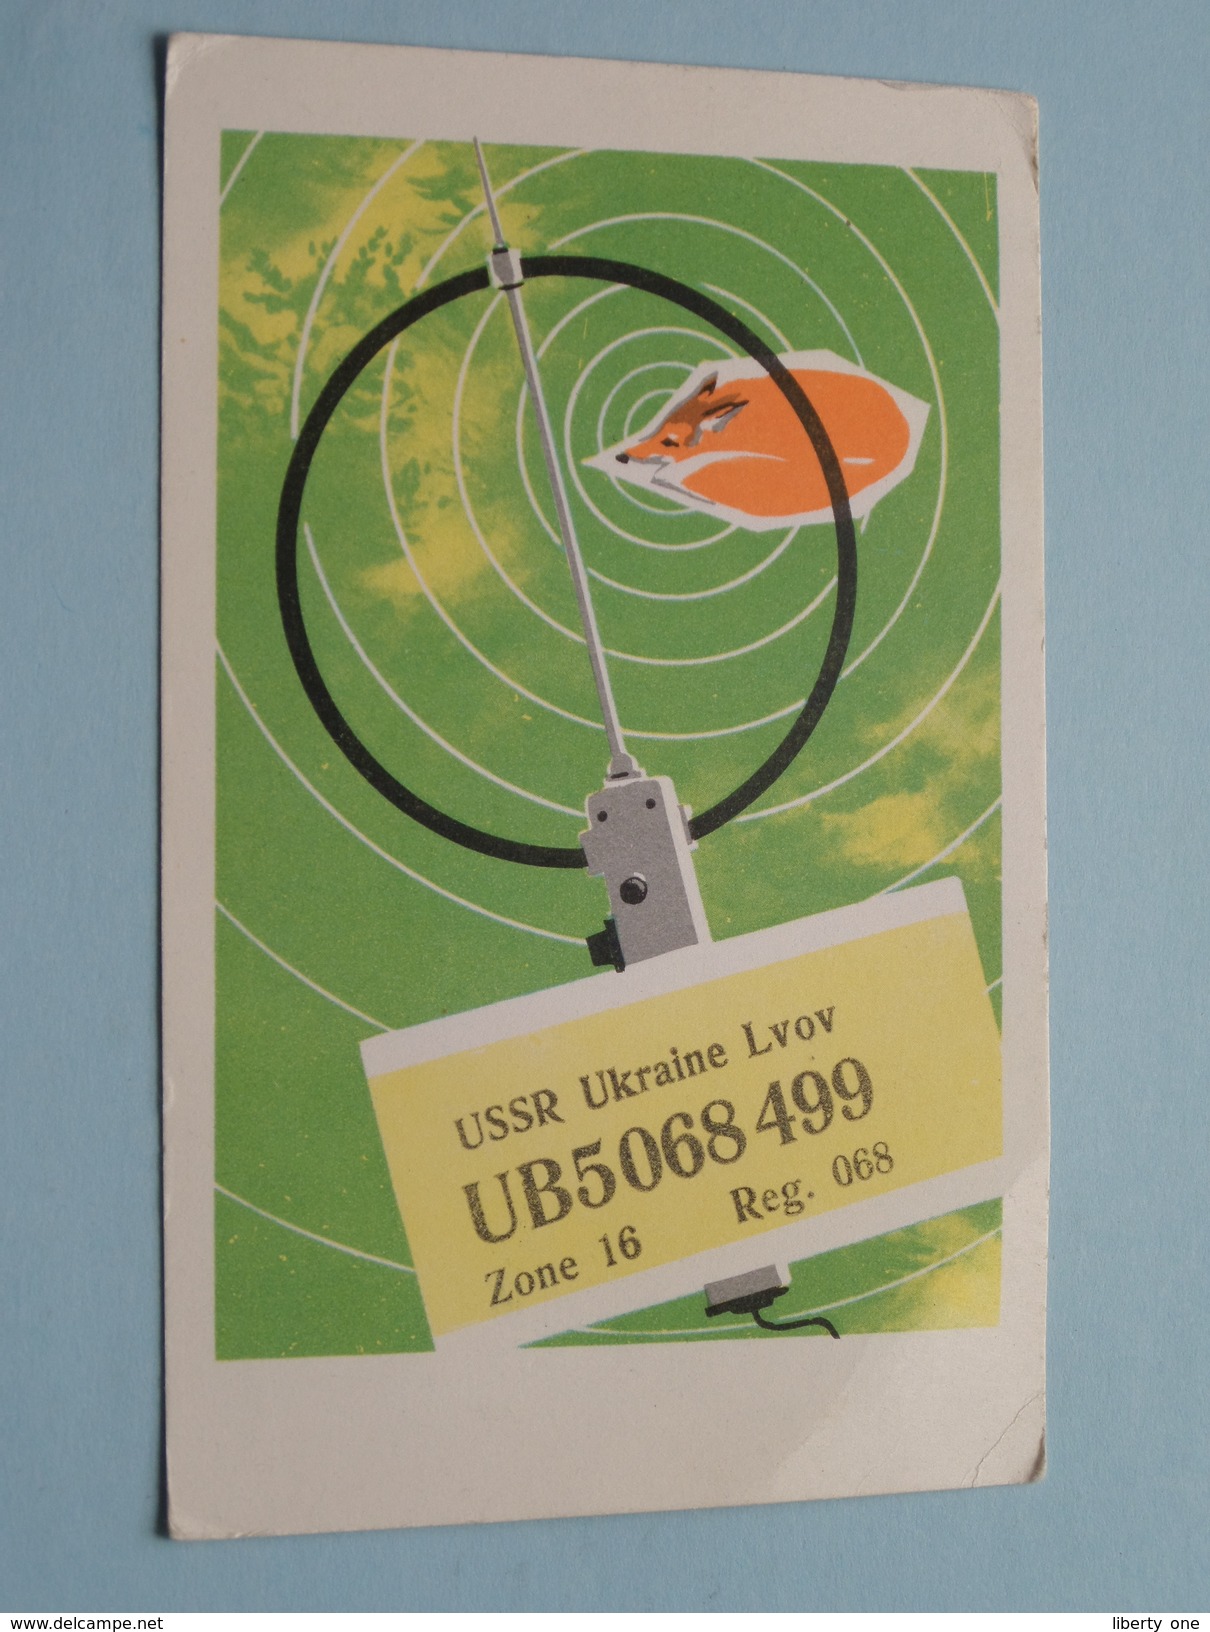 USSR Ukraine Lvov UB5068499 Zone 16 - Reg. 068 > FM7AV - 1981 ( Zie Foto Voor Details ) - Radio-amateur